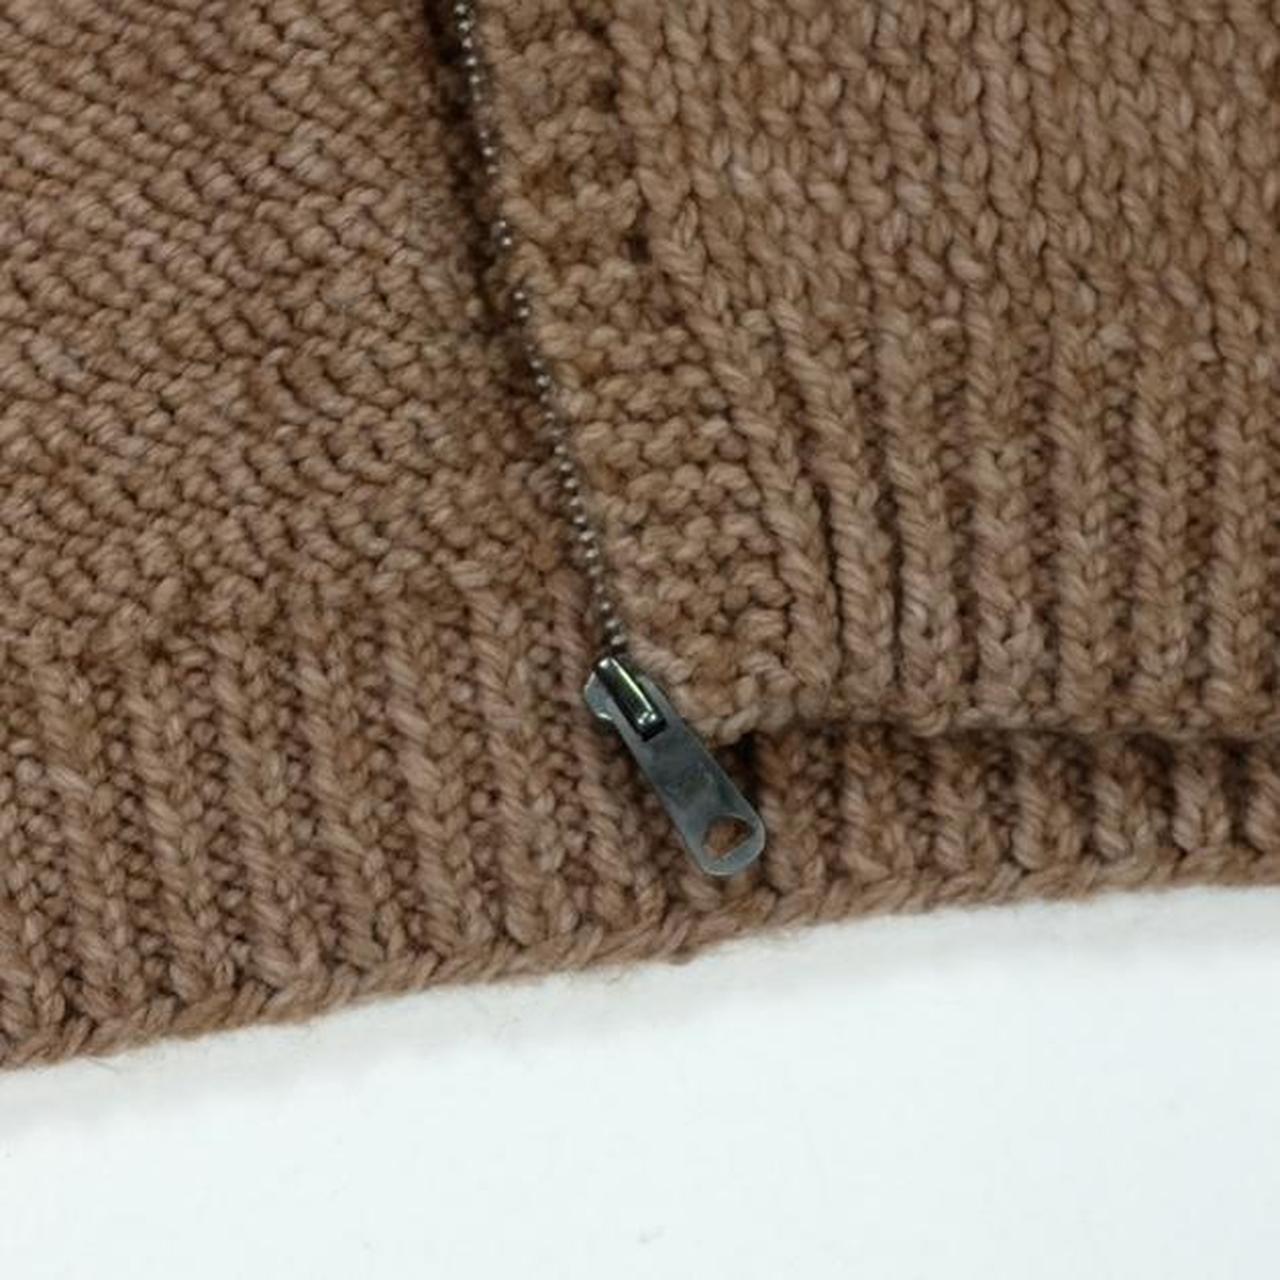 Cowichan Sweater